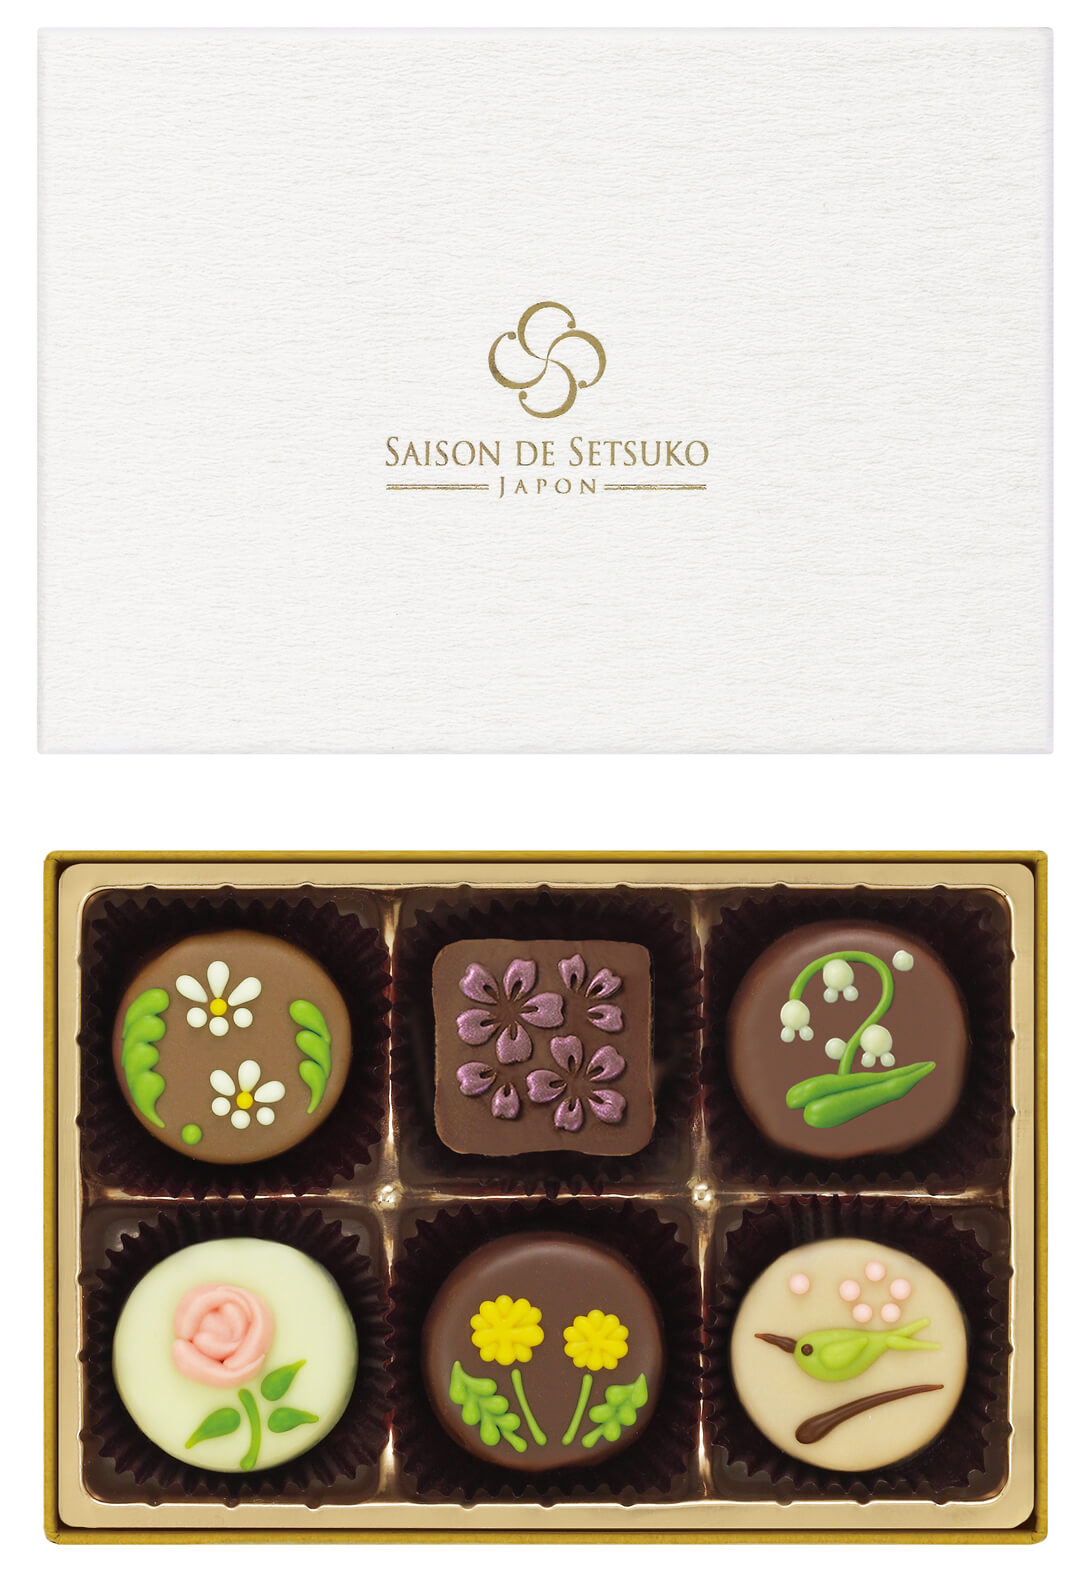 Mary Chocolate Releases Chocolate Based on Japan’s 4 Seasons